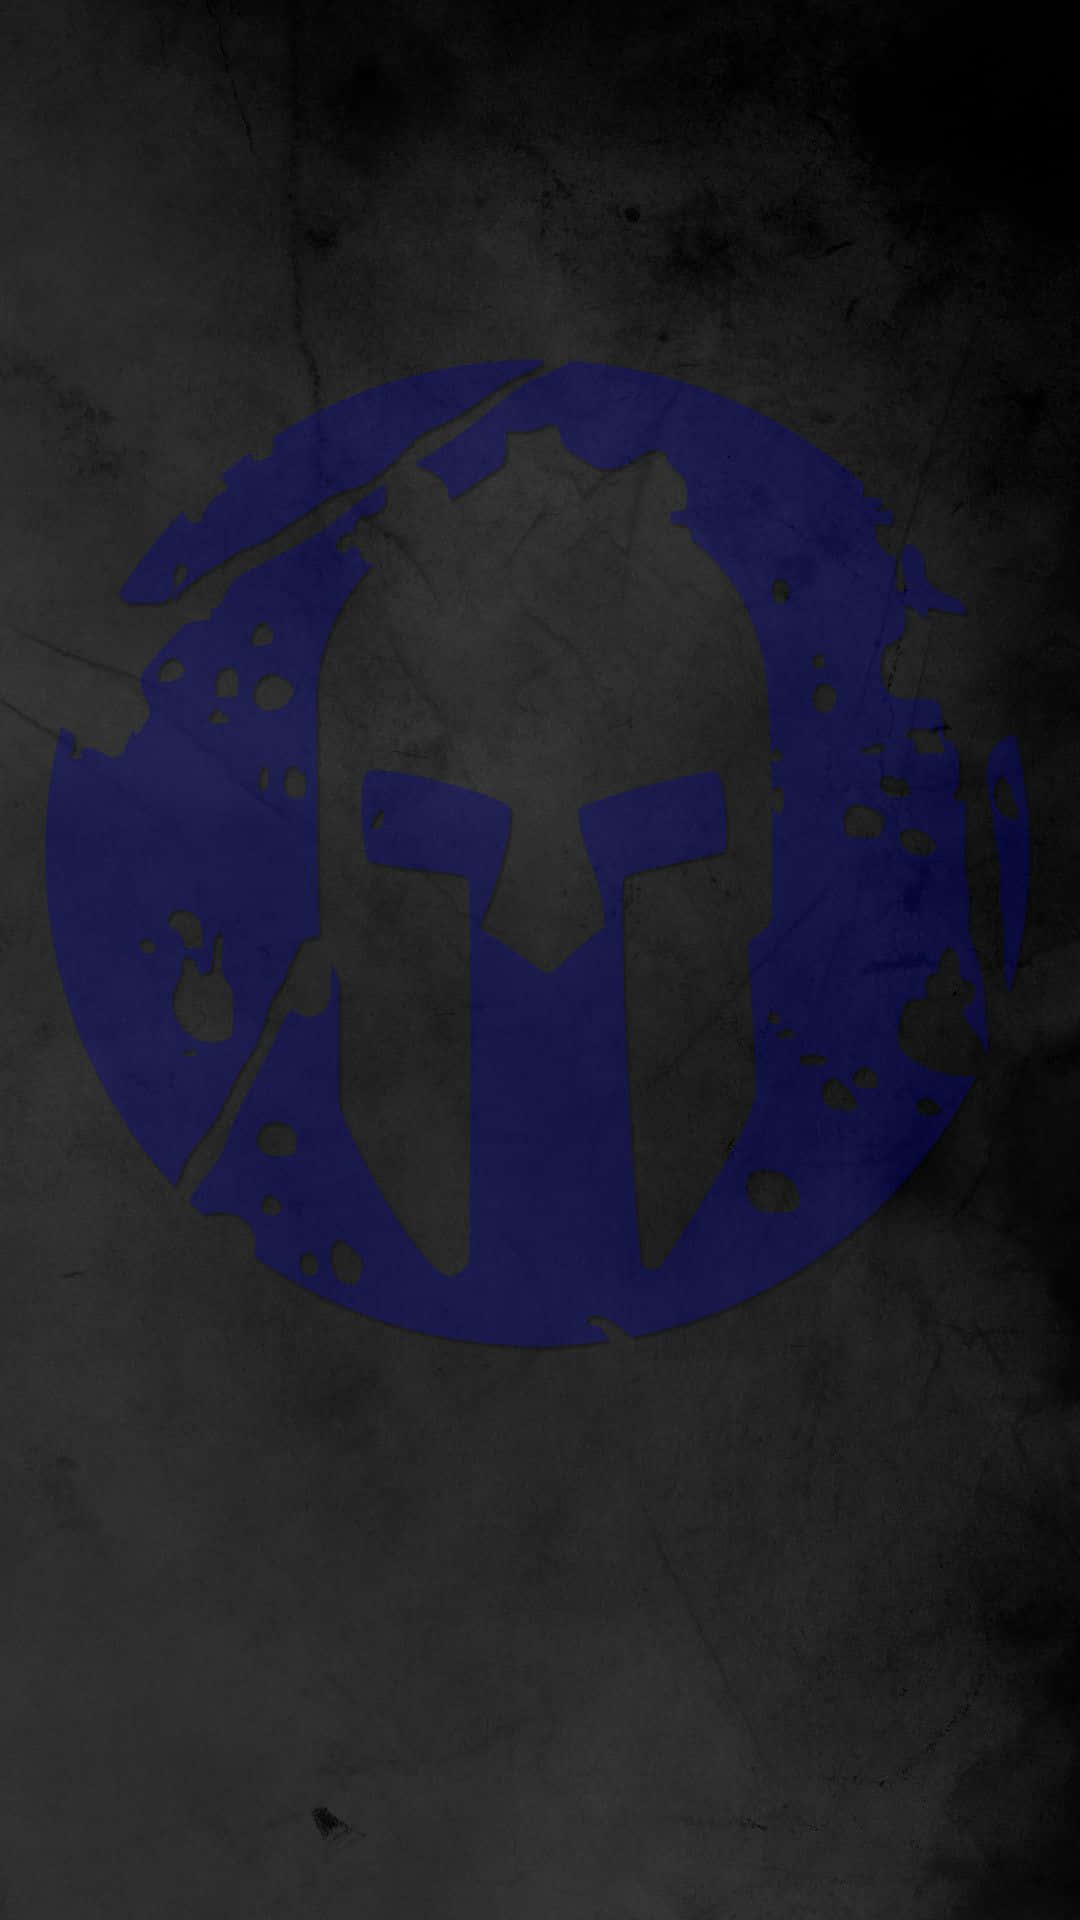 spartan logo wallpaper